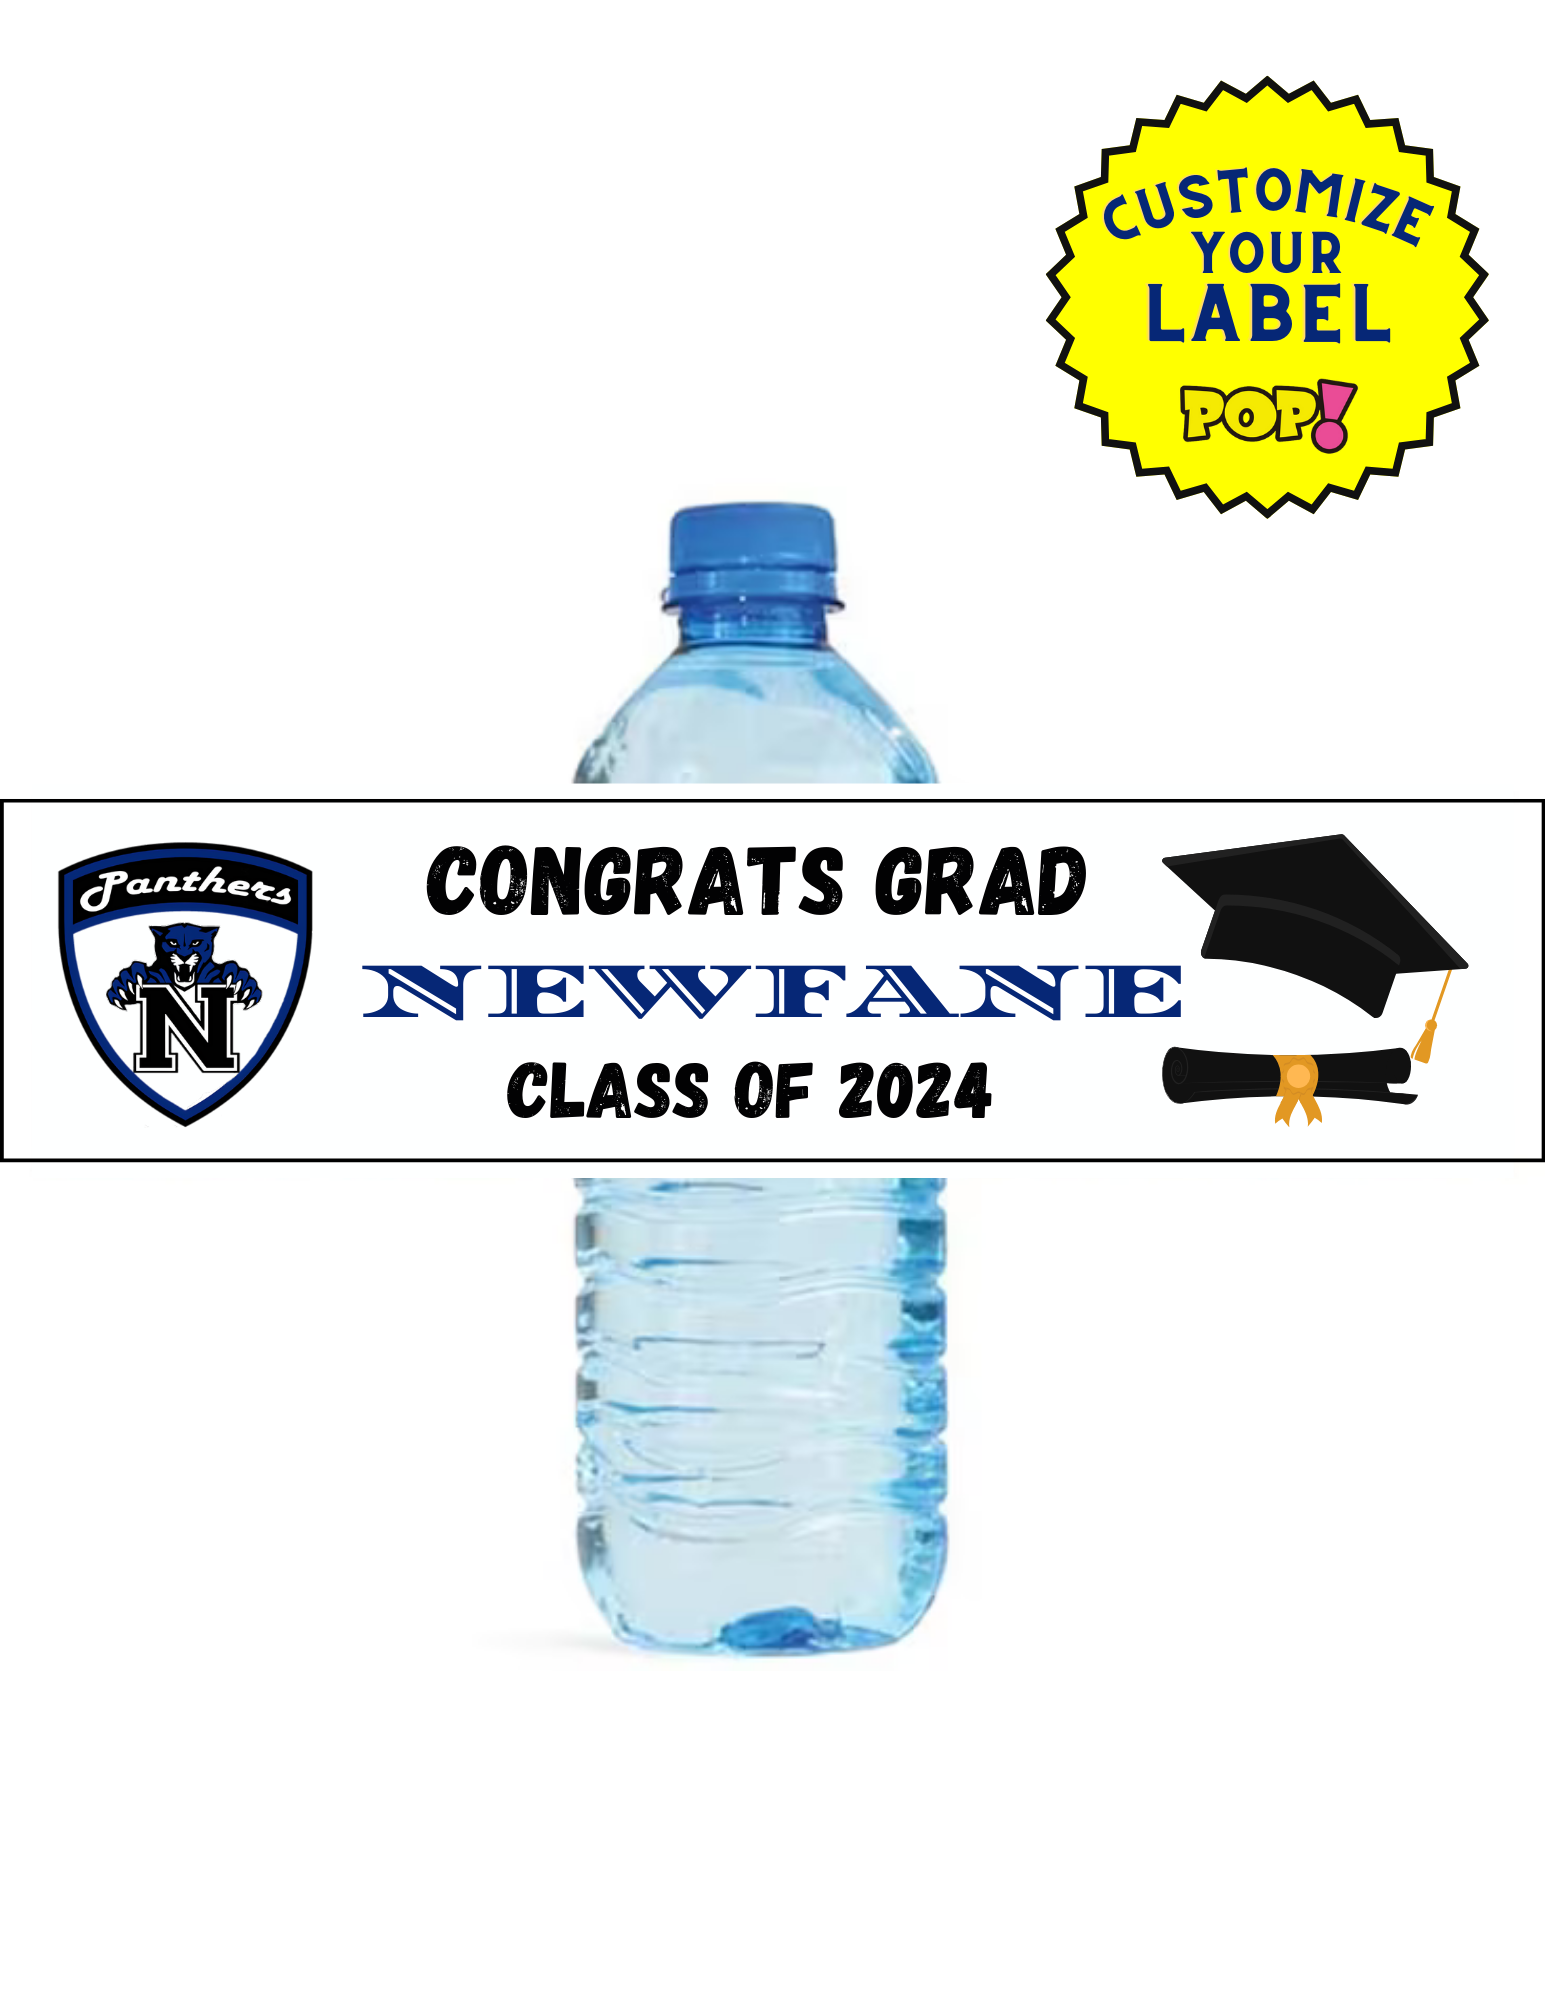 School Graduation Water Bottle Labels - Choose Your School - POPPartyballoons